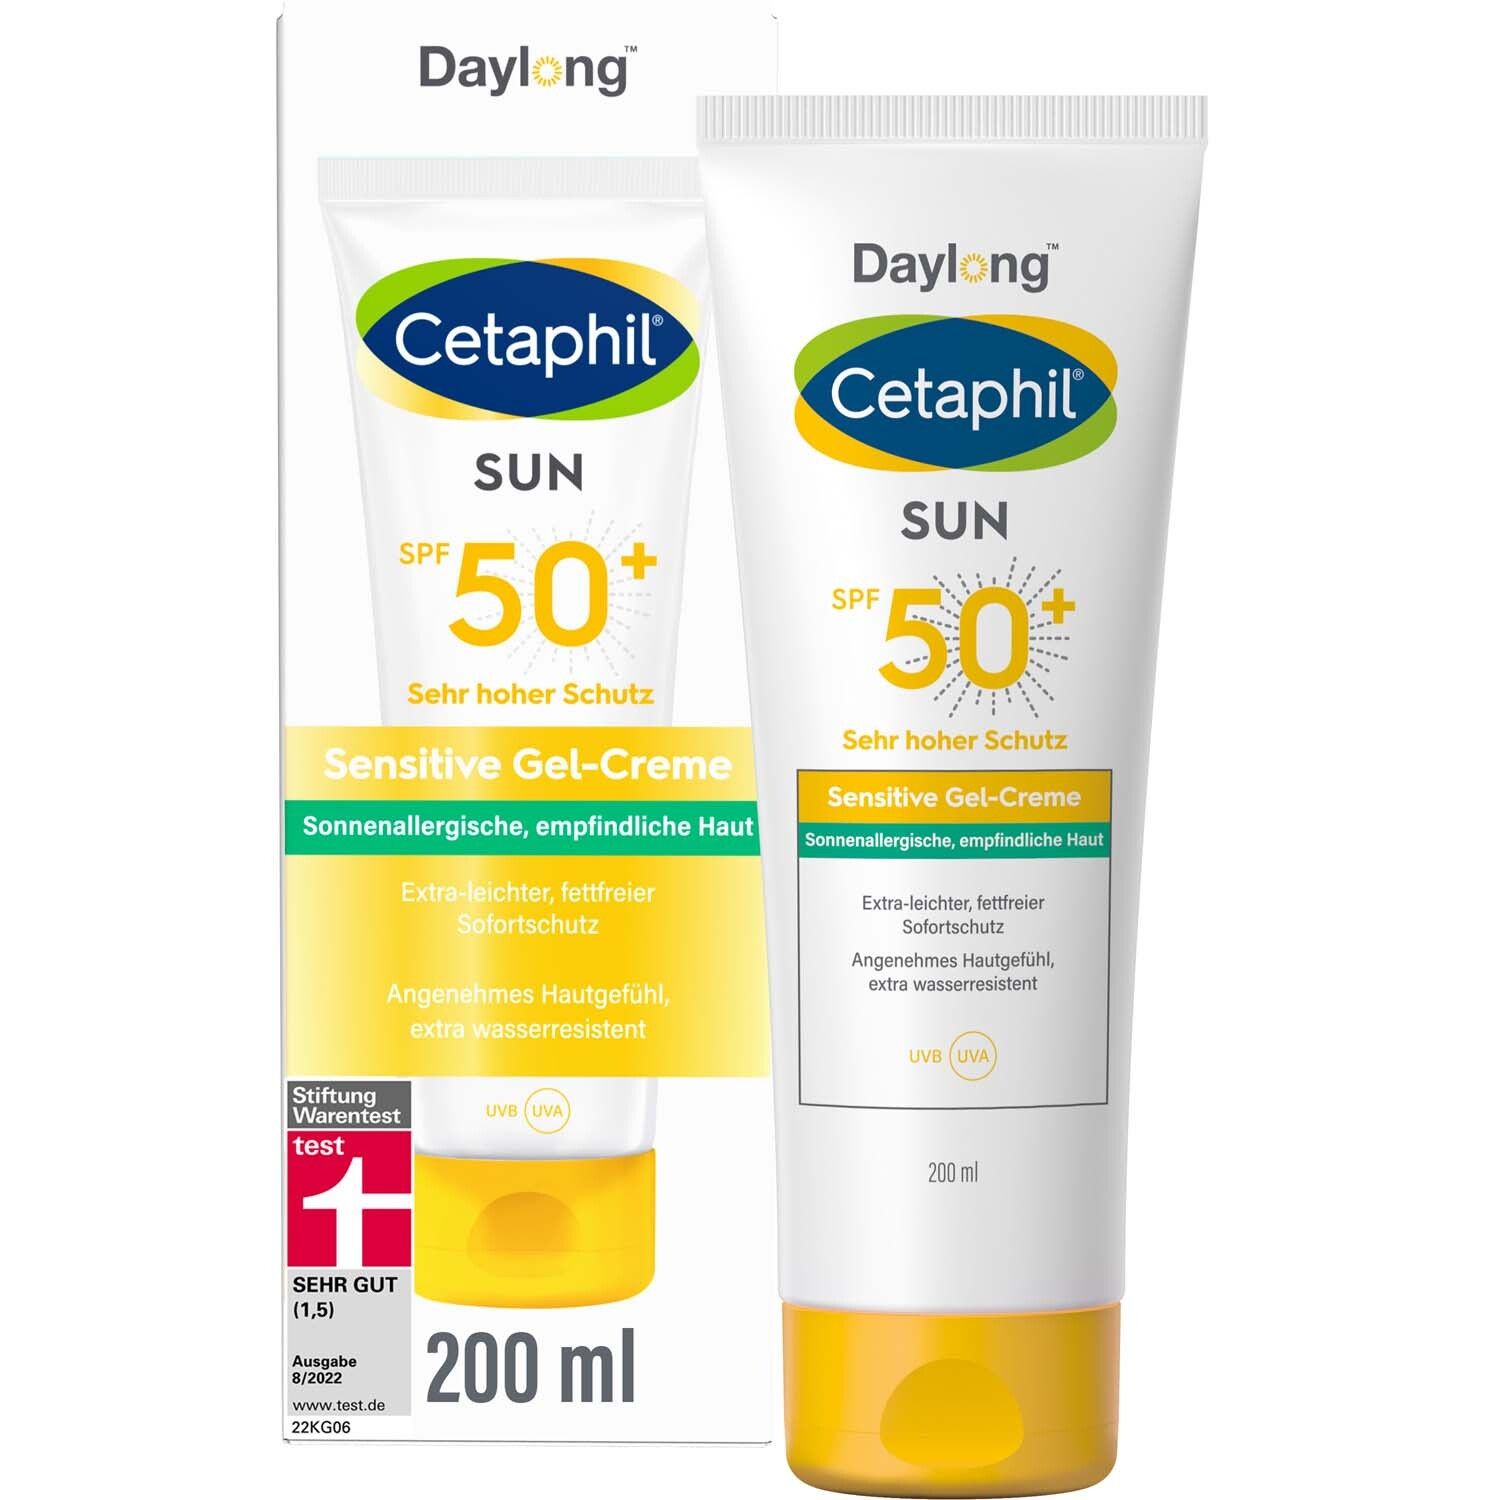 Cetaphil® Sun Daylong SPF 50+ Senstive Gel-Creme